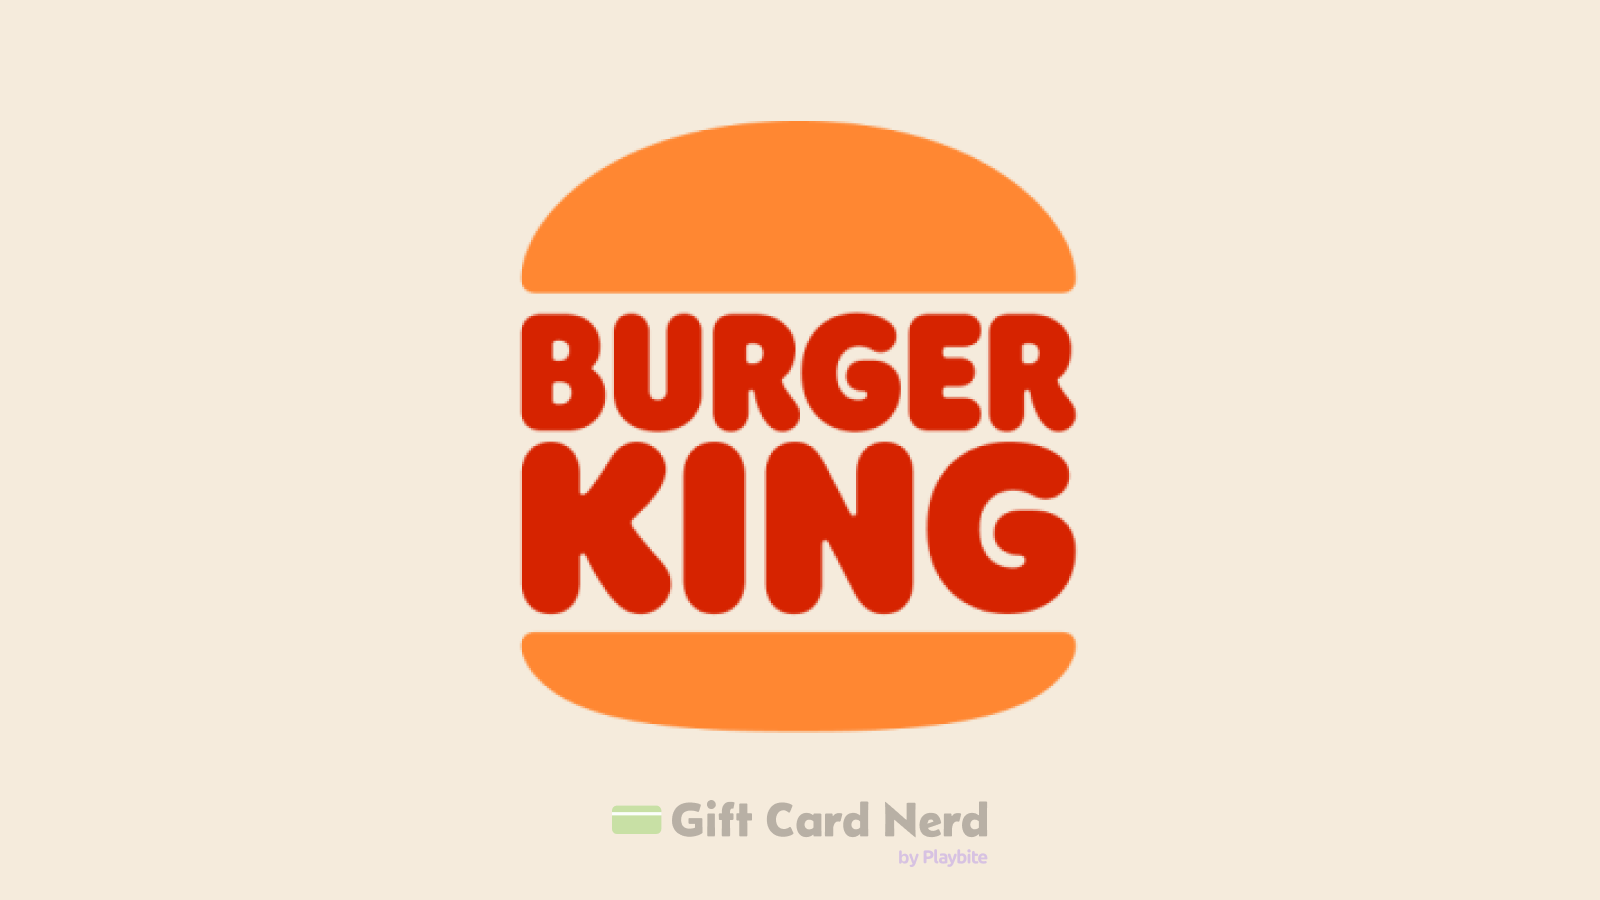 Can I Use a Burger King Gift Card on DoorDash?